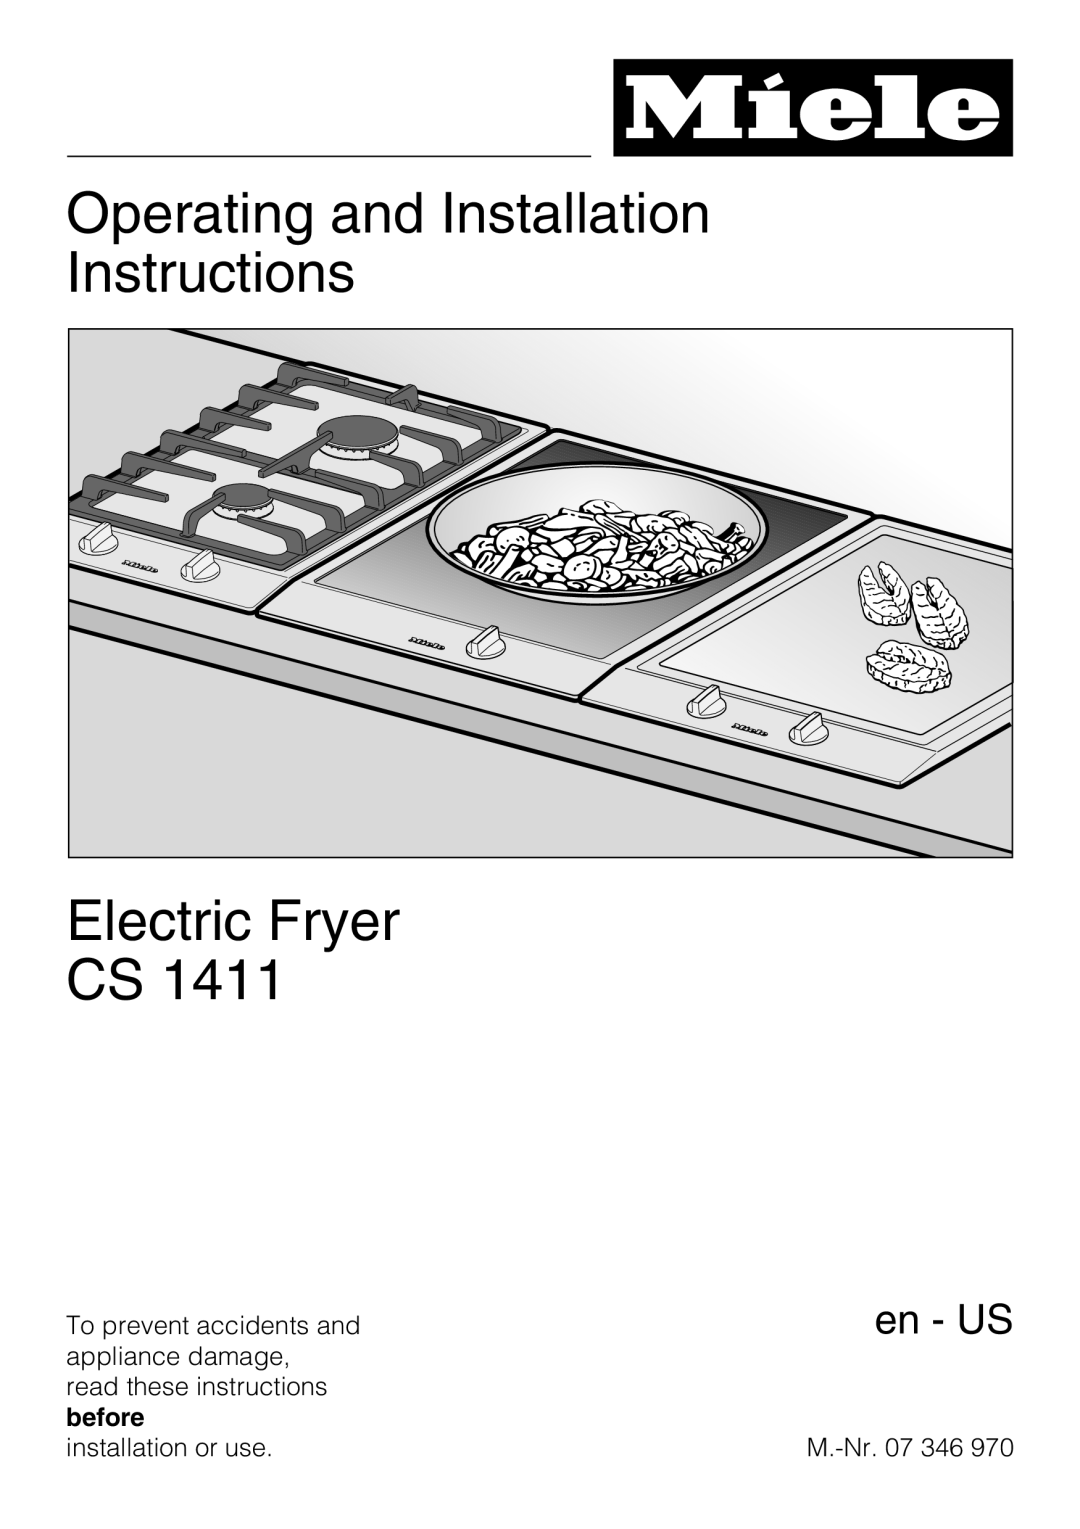 Miele CS1411 installation instructions Operating and Installation Instructions, Electric Fryer CS, en - US 